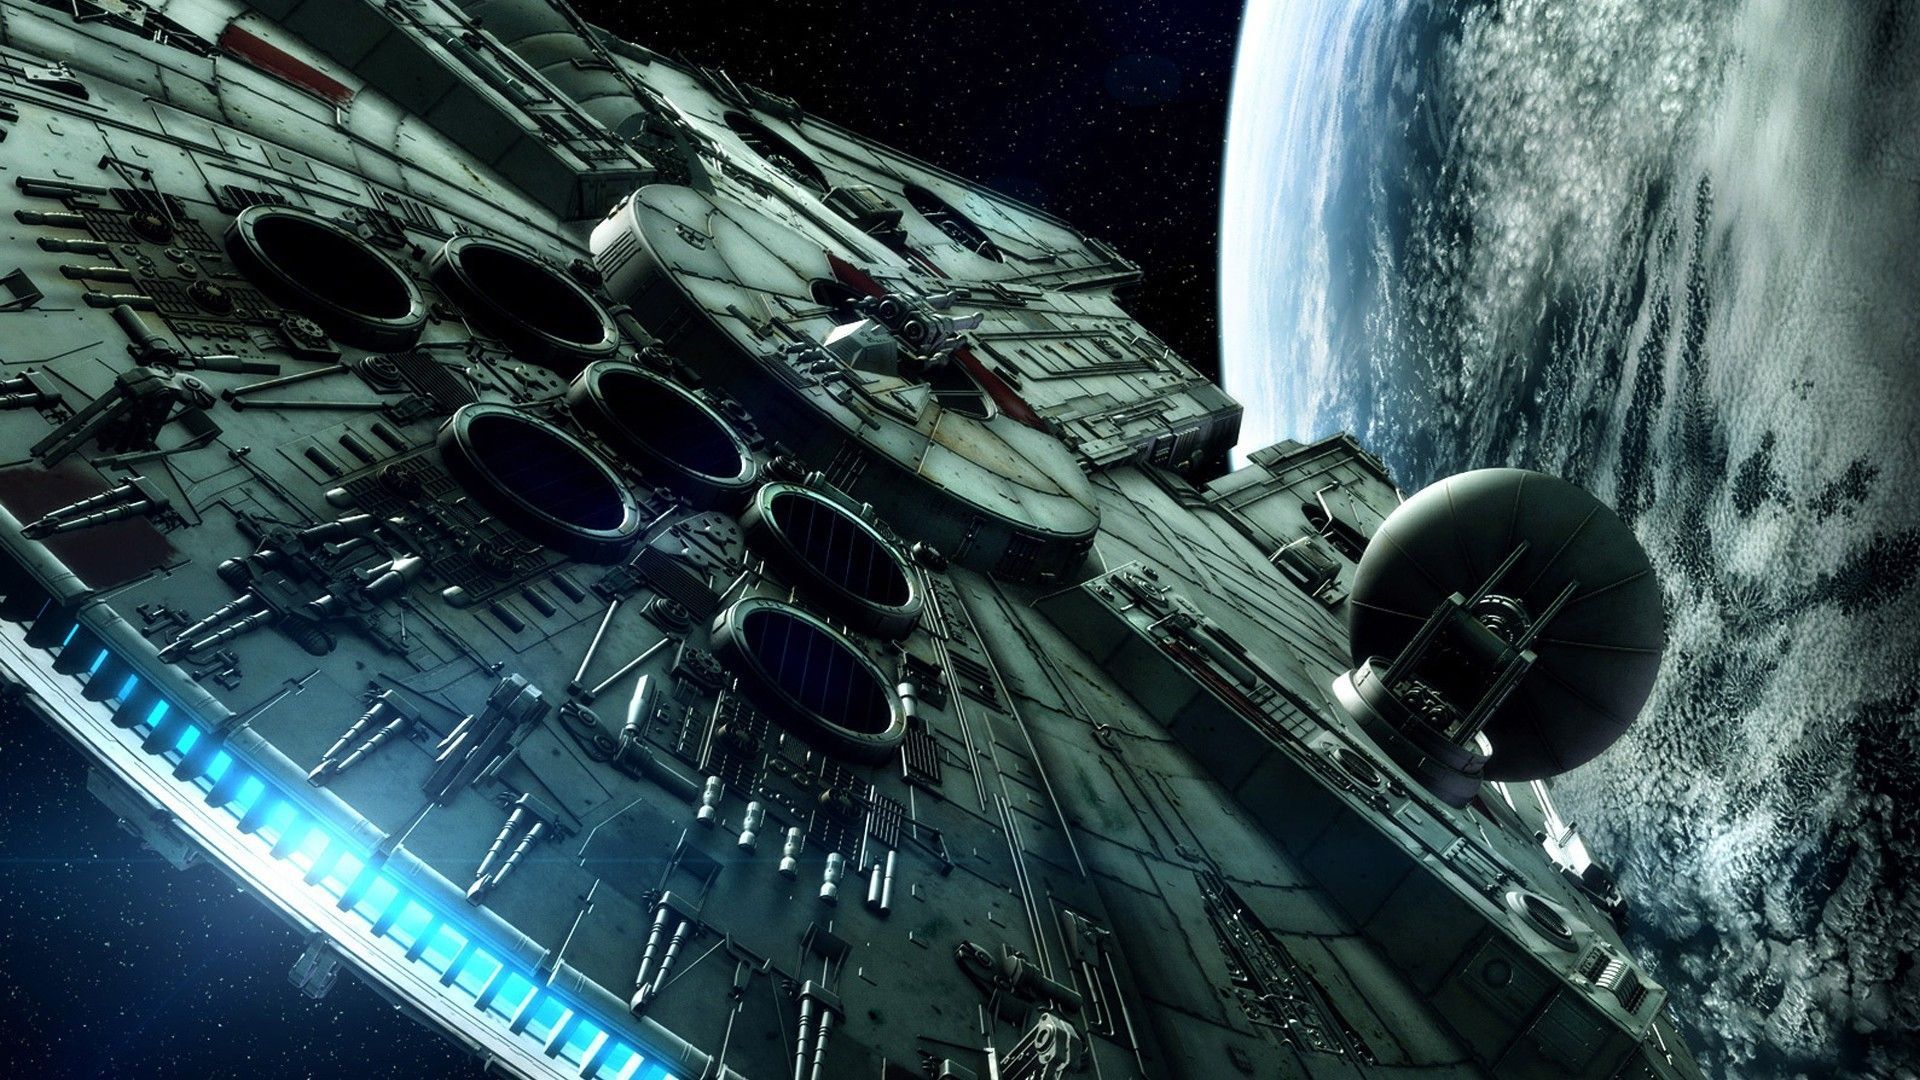 The Millenium Falcon - Star Wars HD Appealing Wallpaper Free HD ...